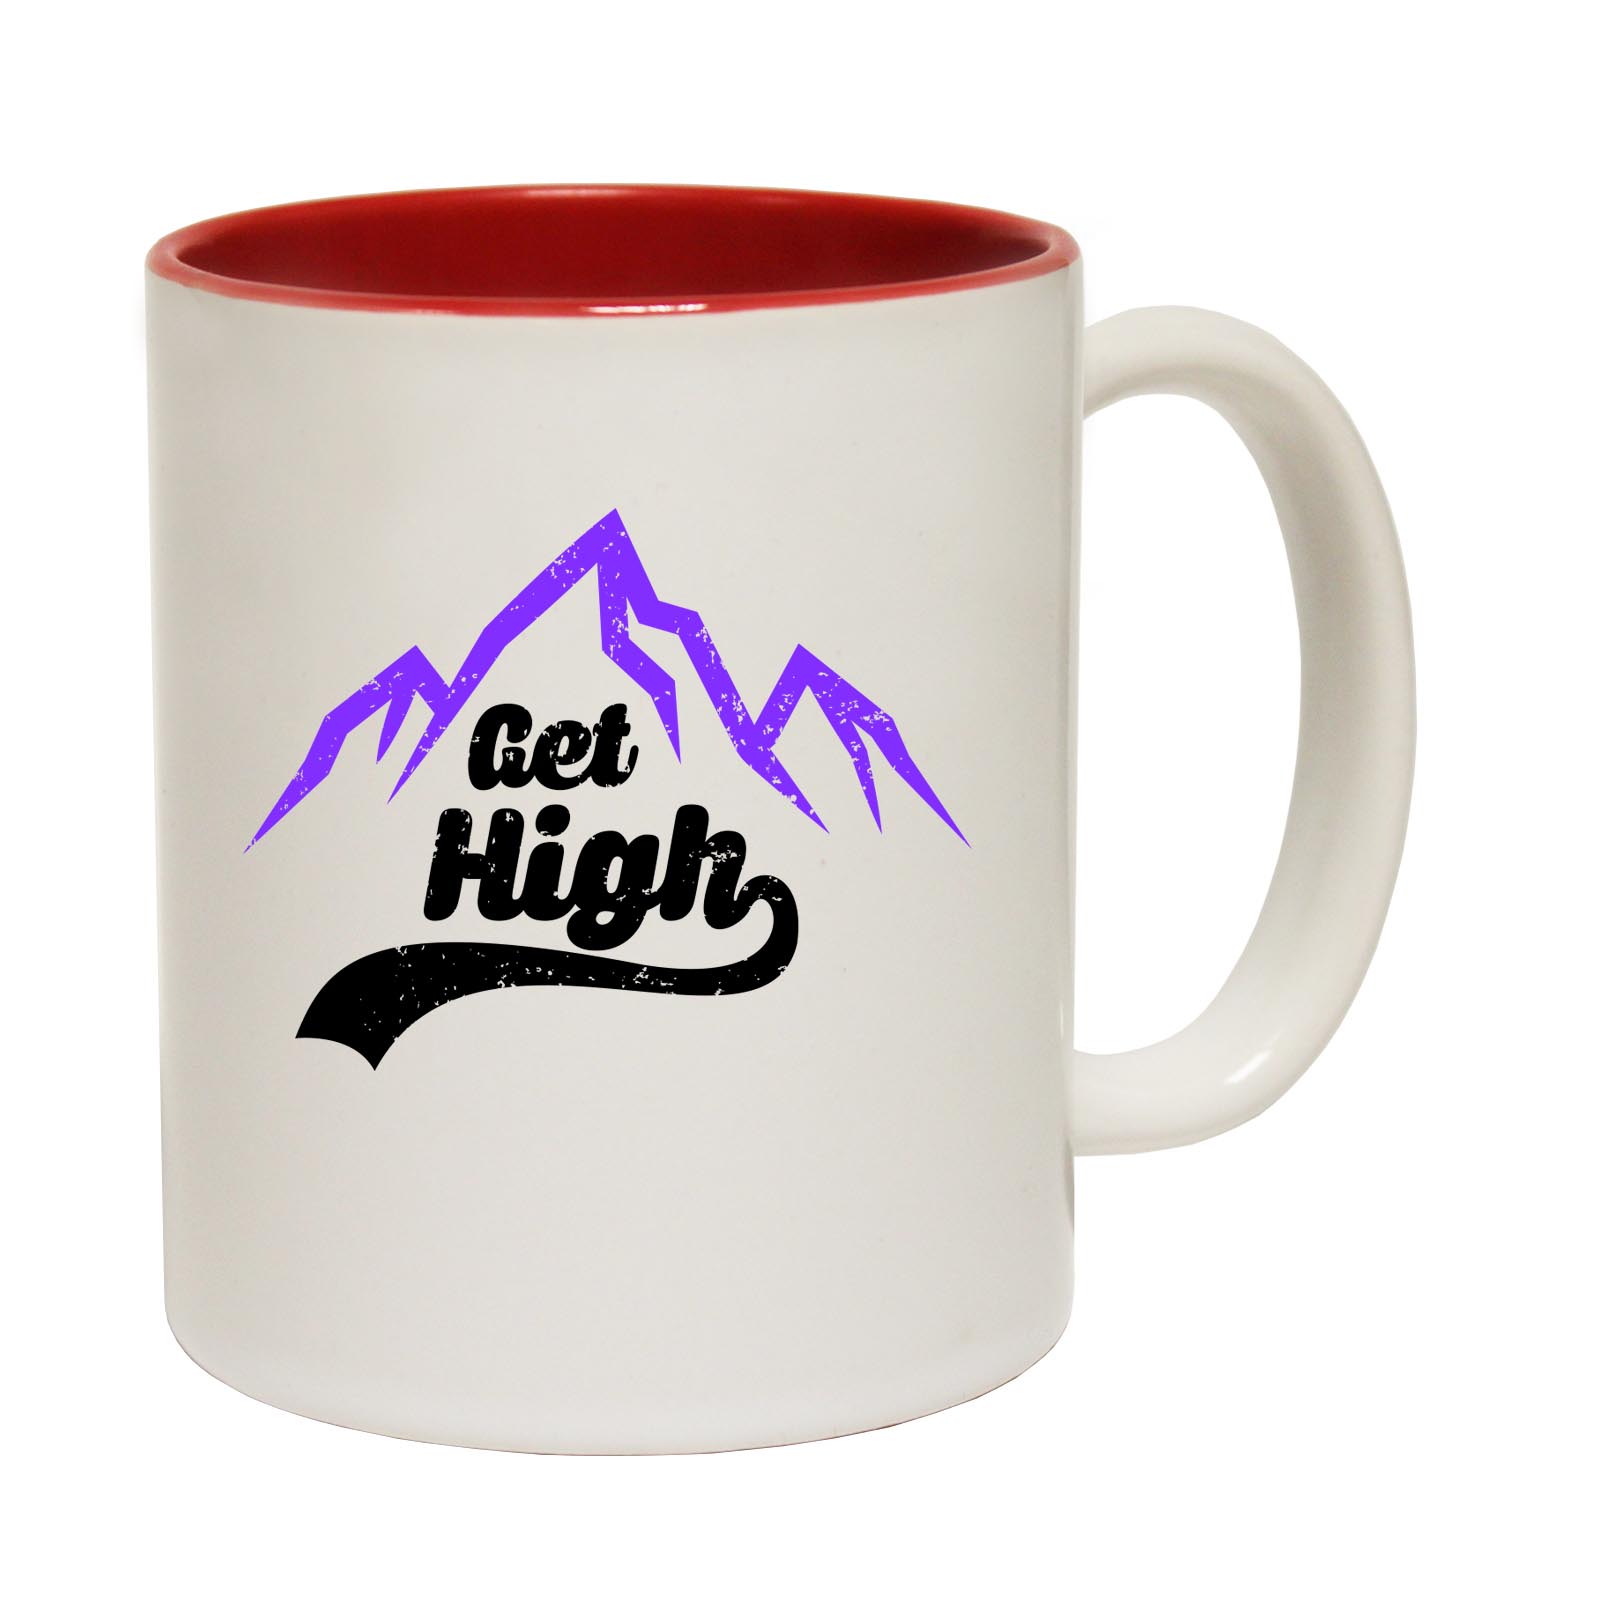 SUPER BC5 Funny Novelty Mug Cup Coffee Tea 